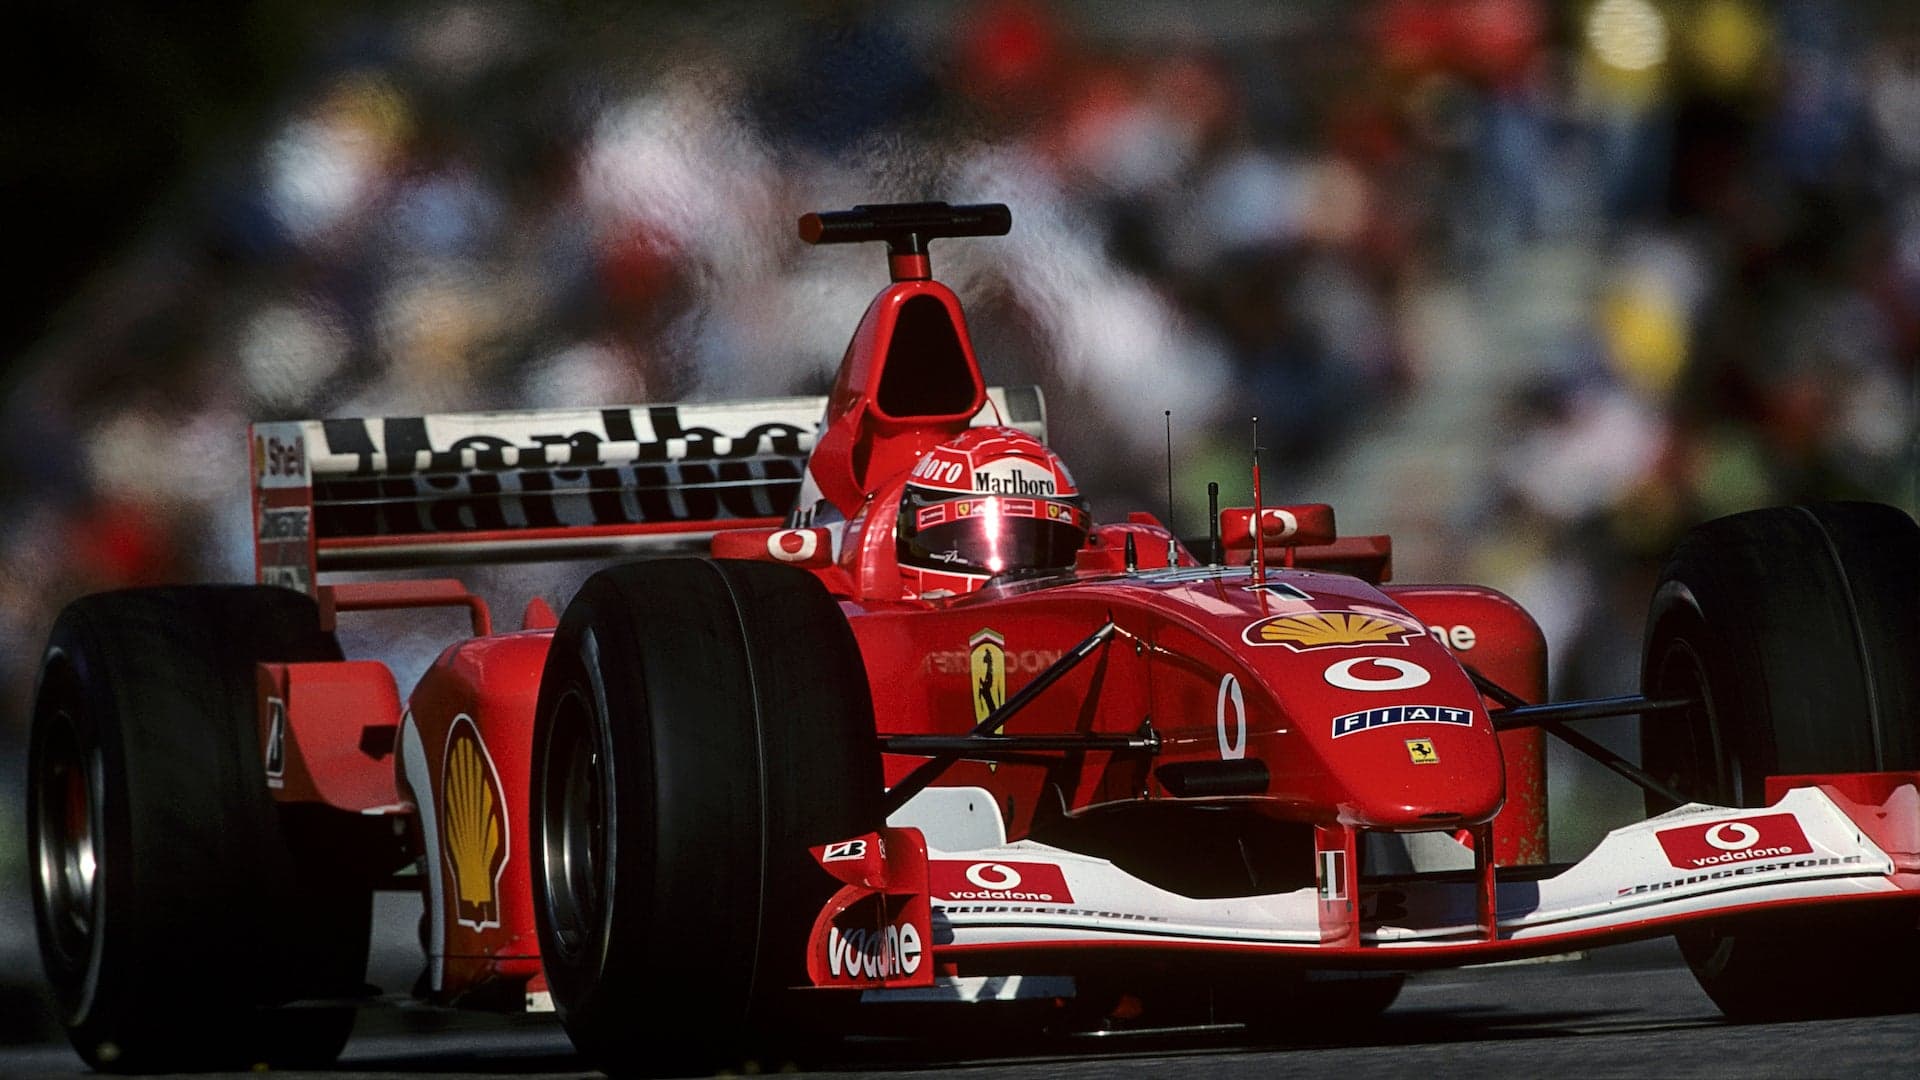 F1 Legend Michael Schumacher’s Race-Winning Ferrari F2002 Race Car Is Headed to Auction